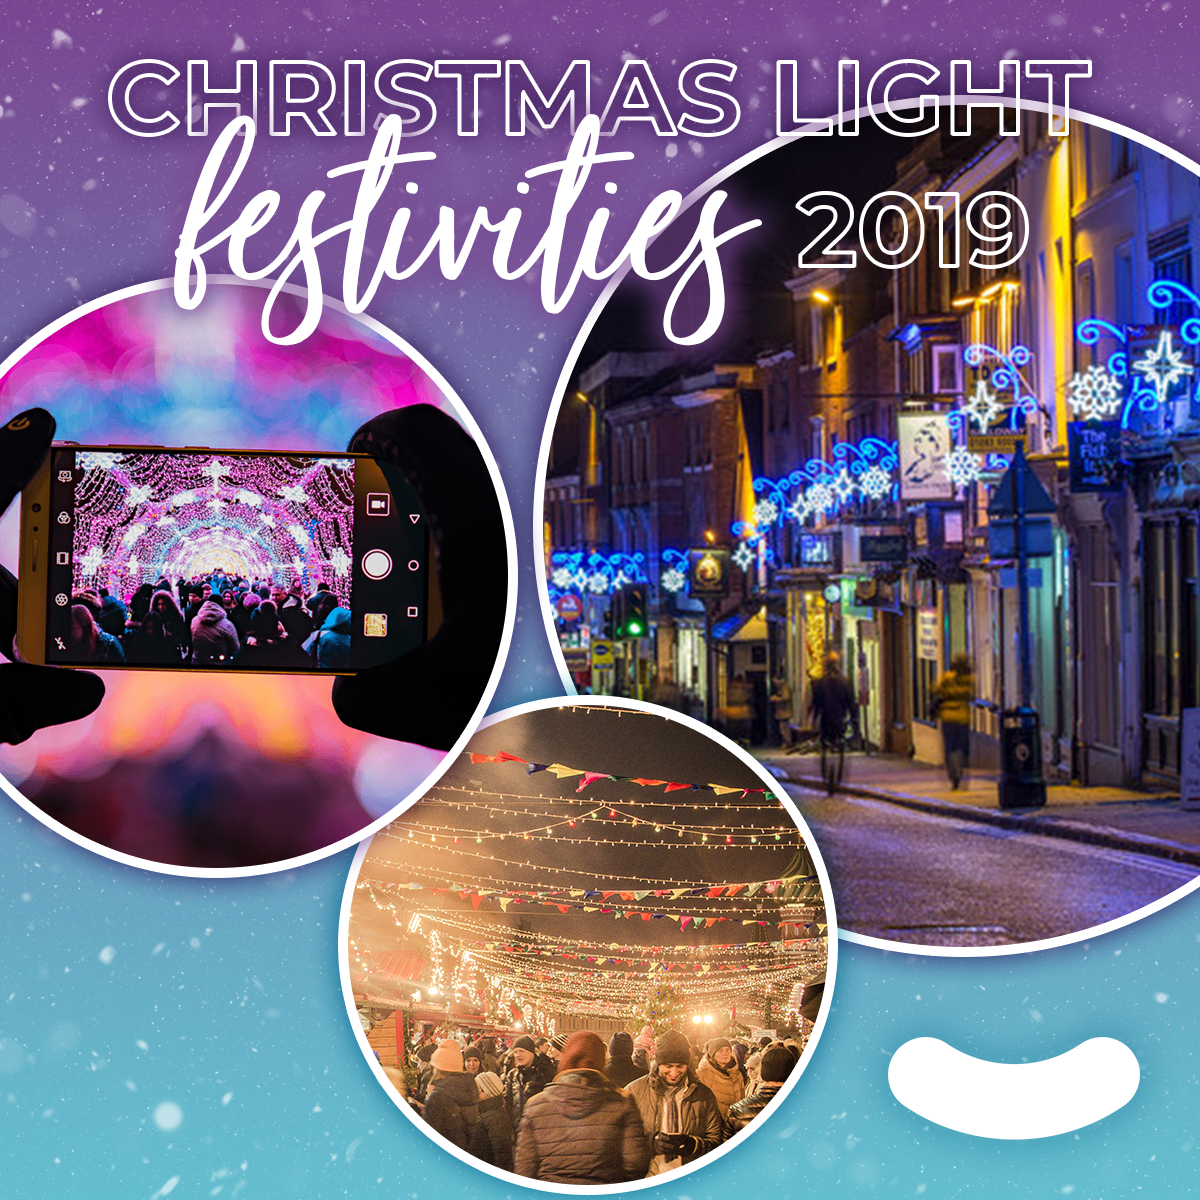 Christmas light festivities near you in 2019!